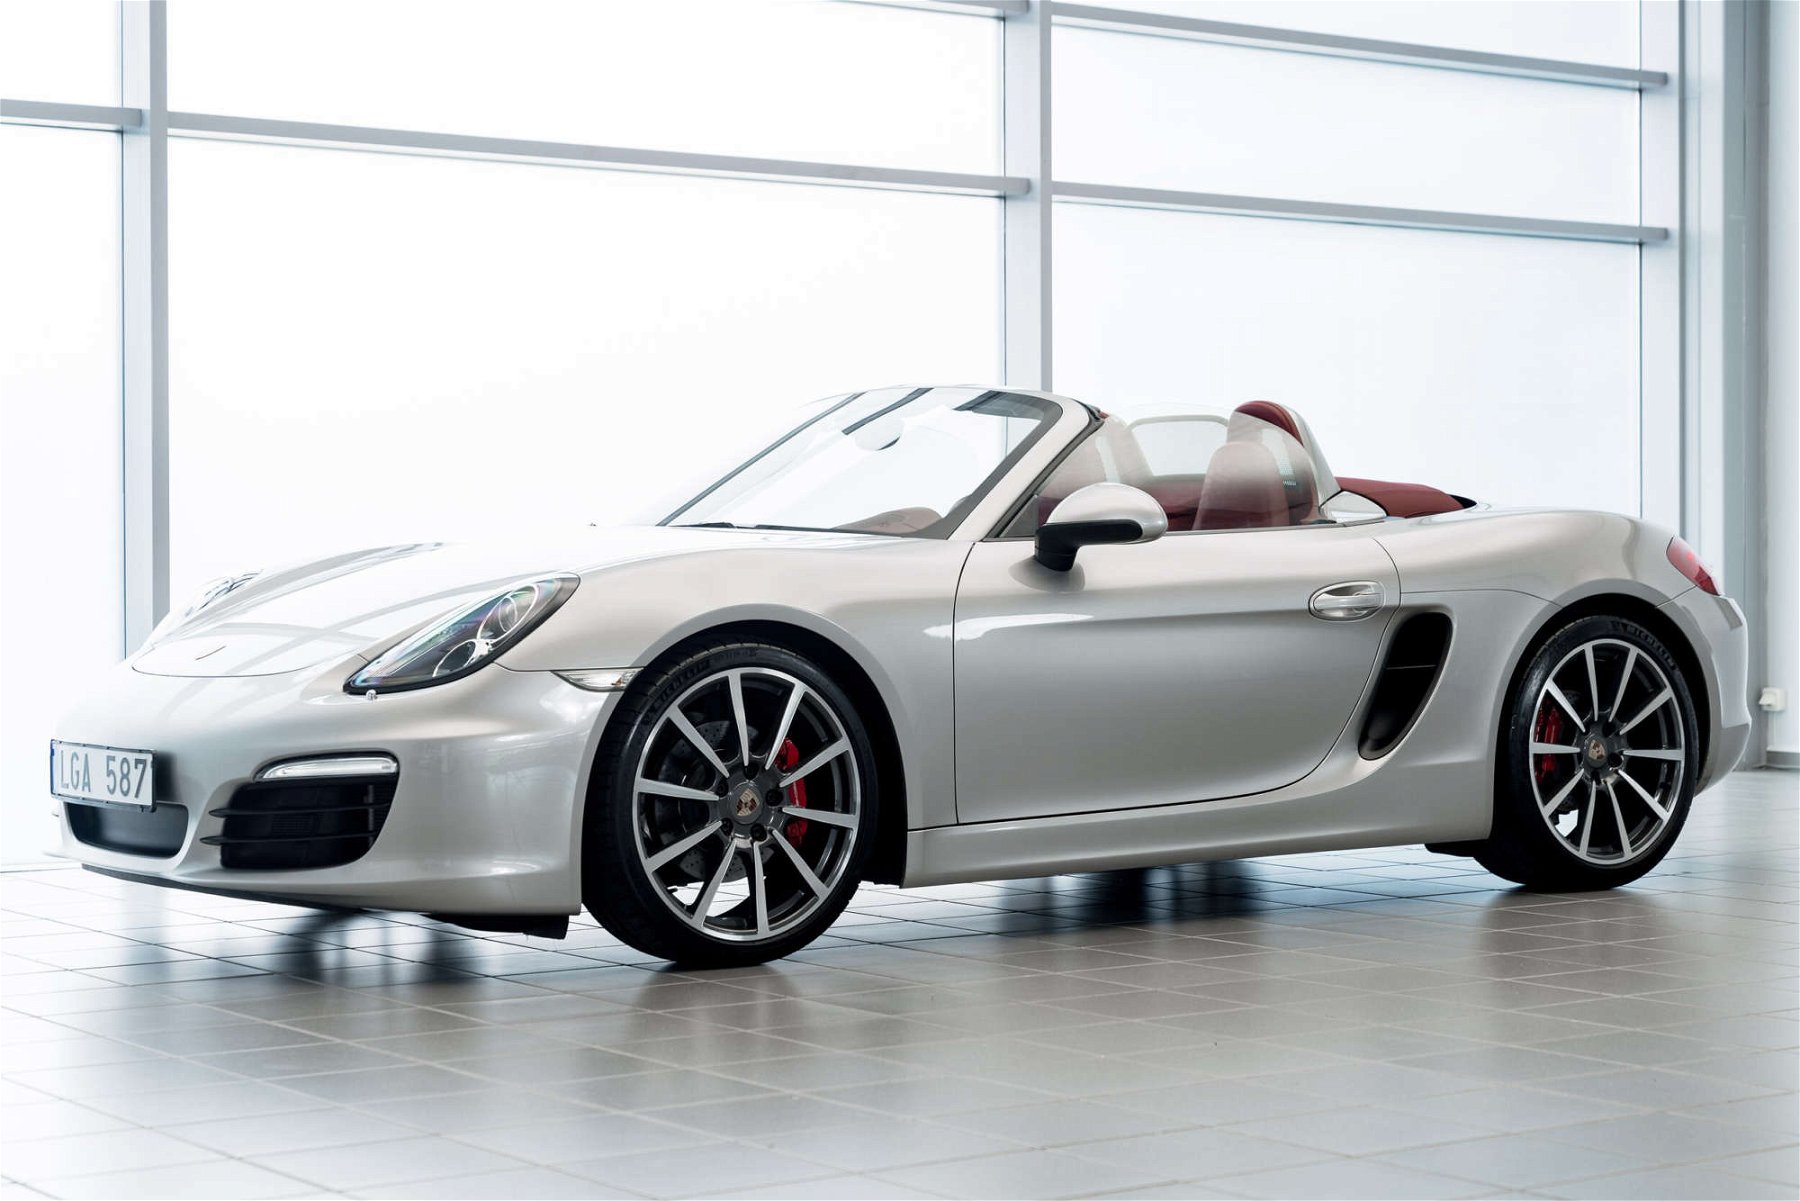 Porsche Boxster S 2013  - Marketplace for Porsche Sports Cars